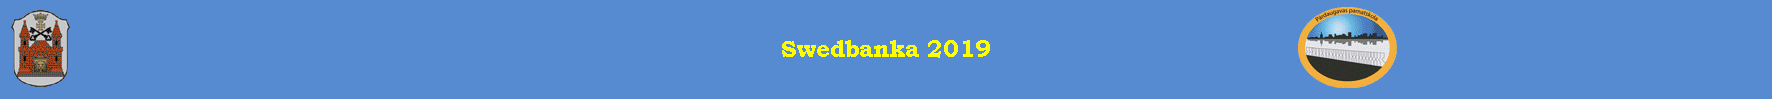 Swedbank 2019